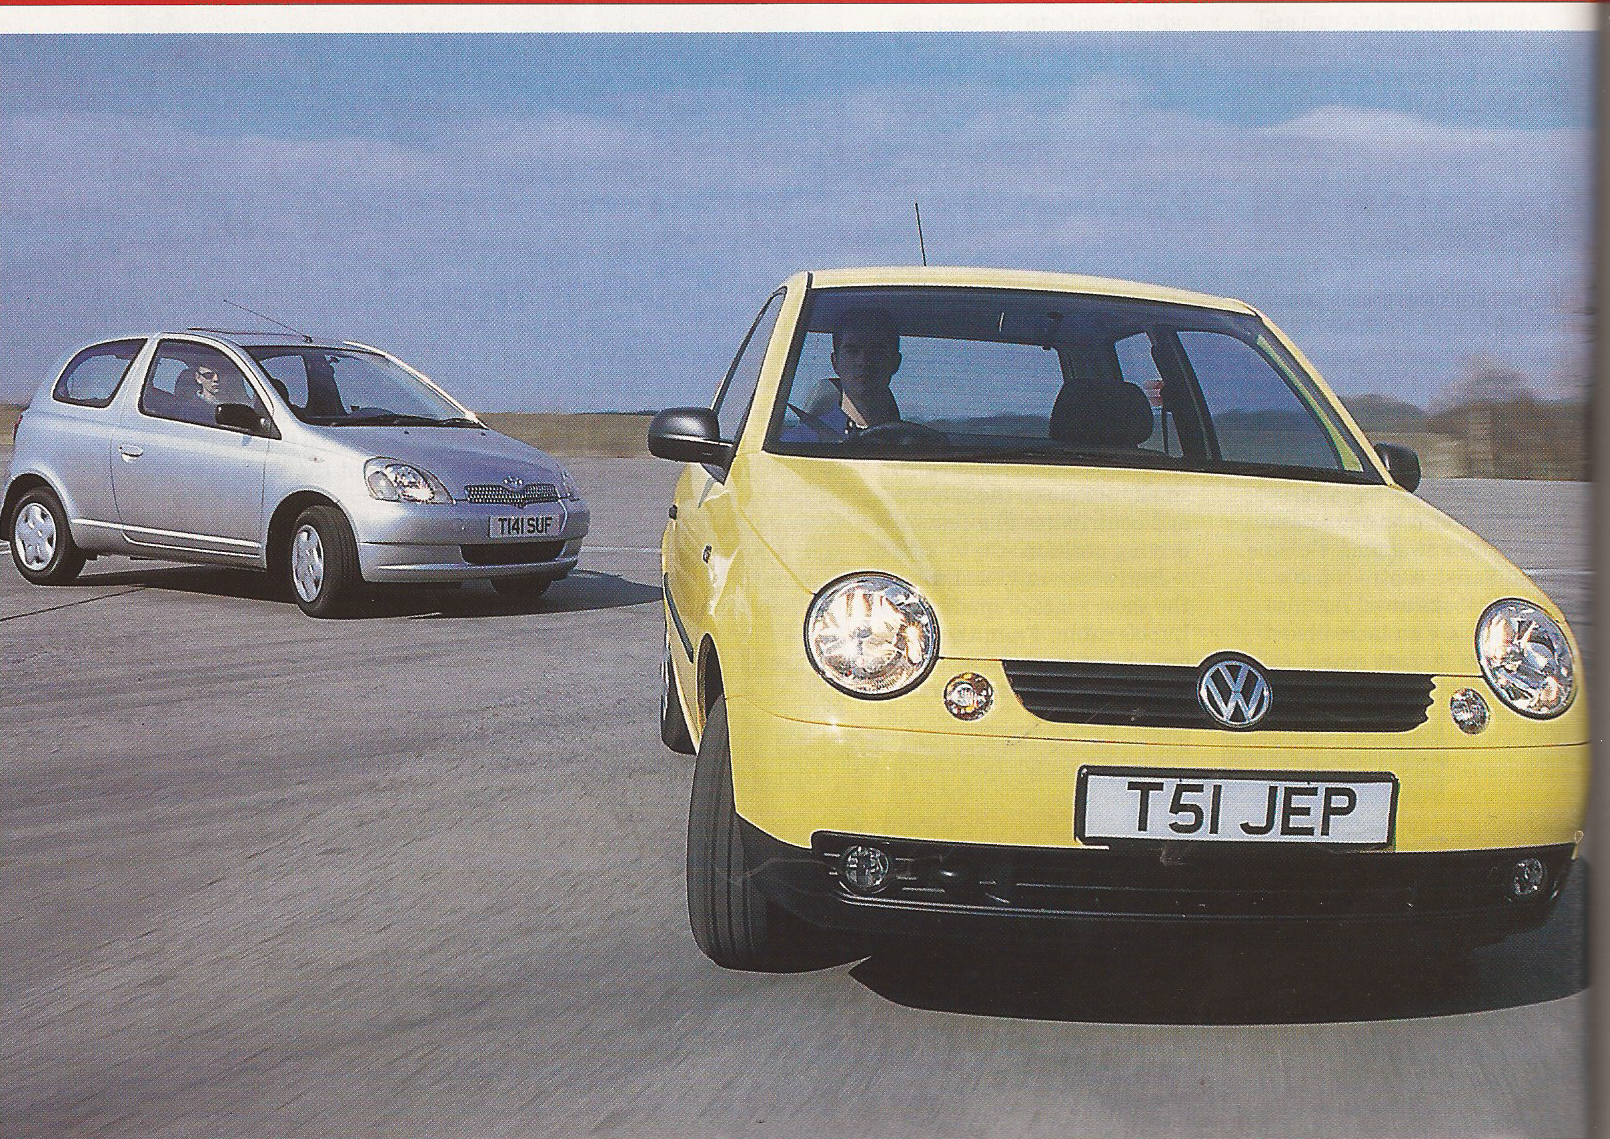 A guaranteed future classic 😎 2005 VW Lupo GTI 6-Speed recently